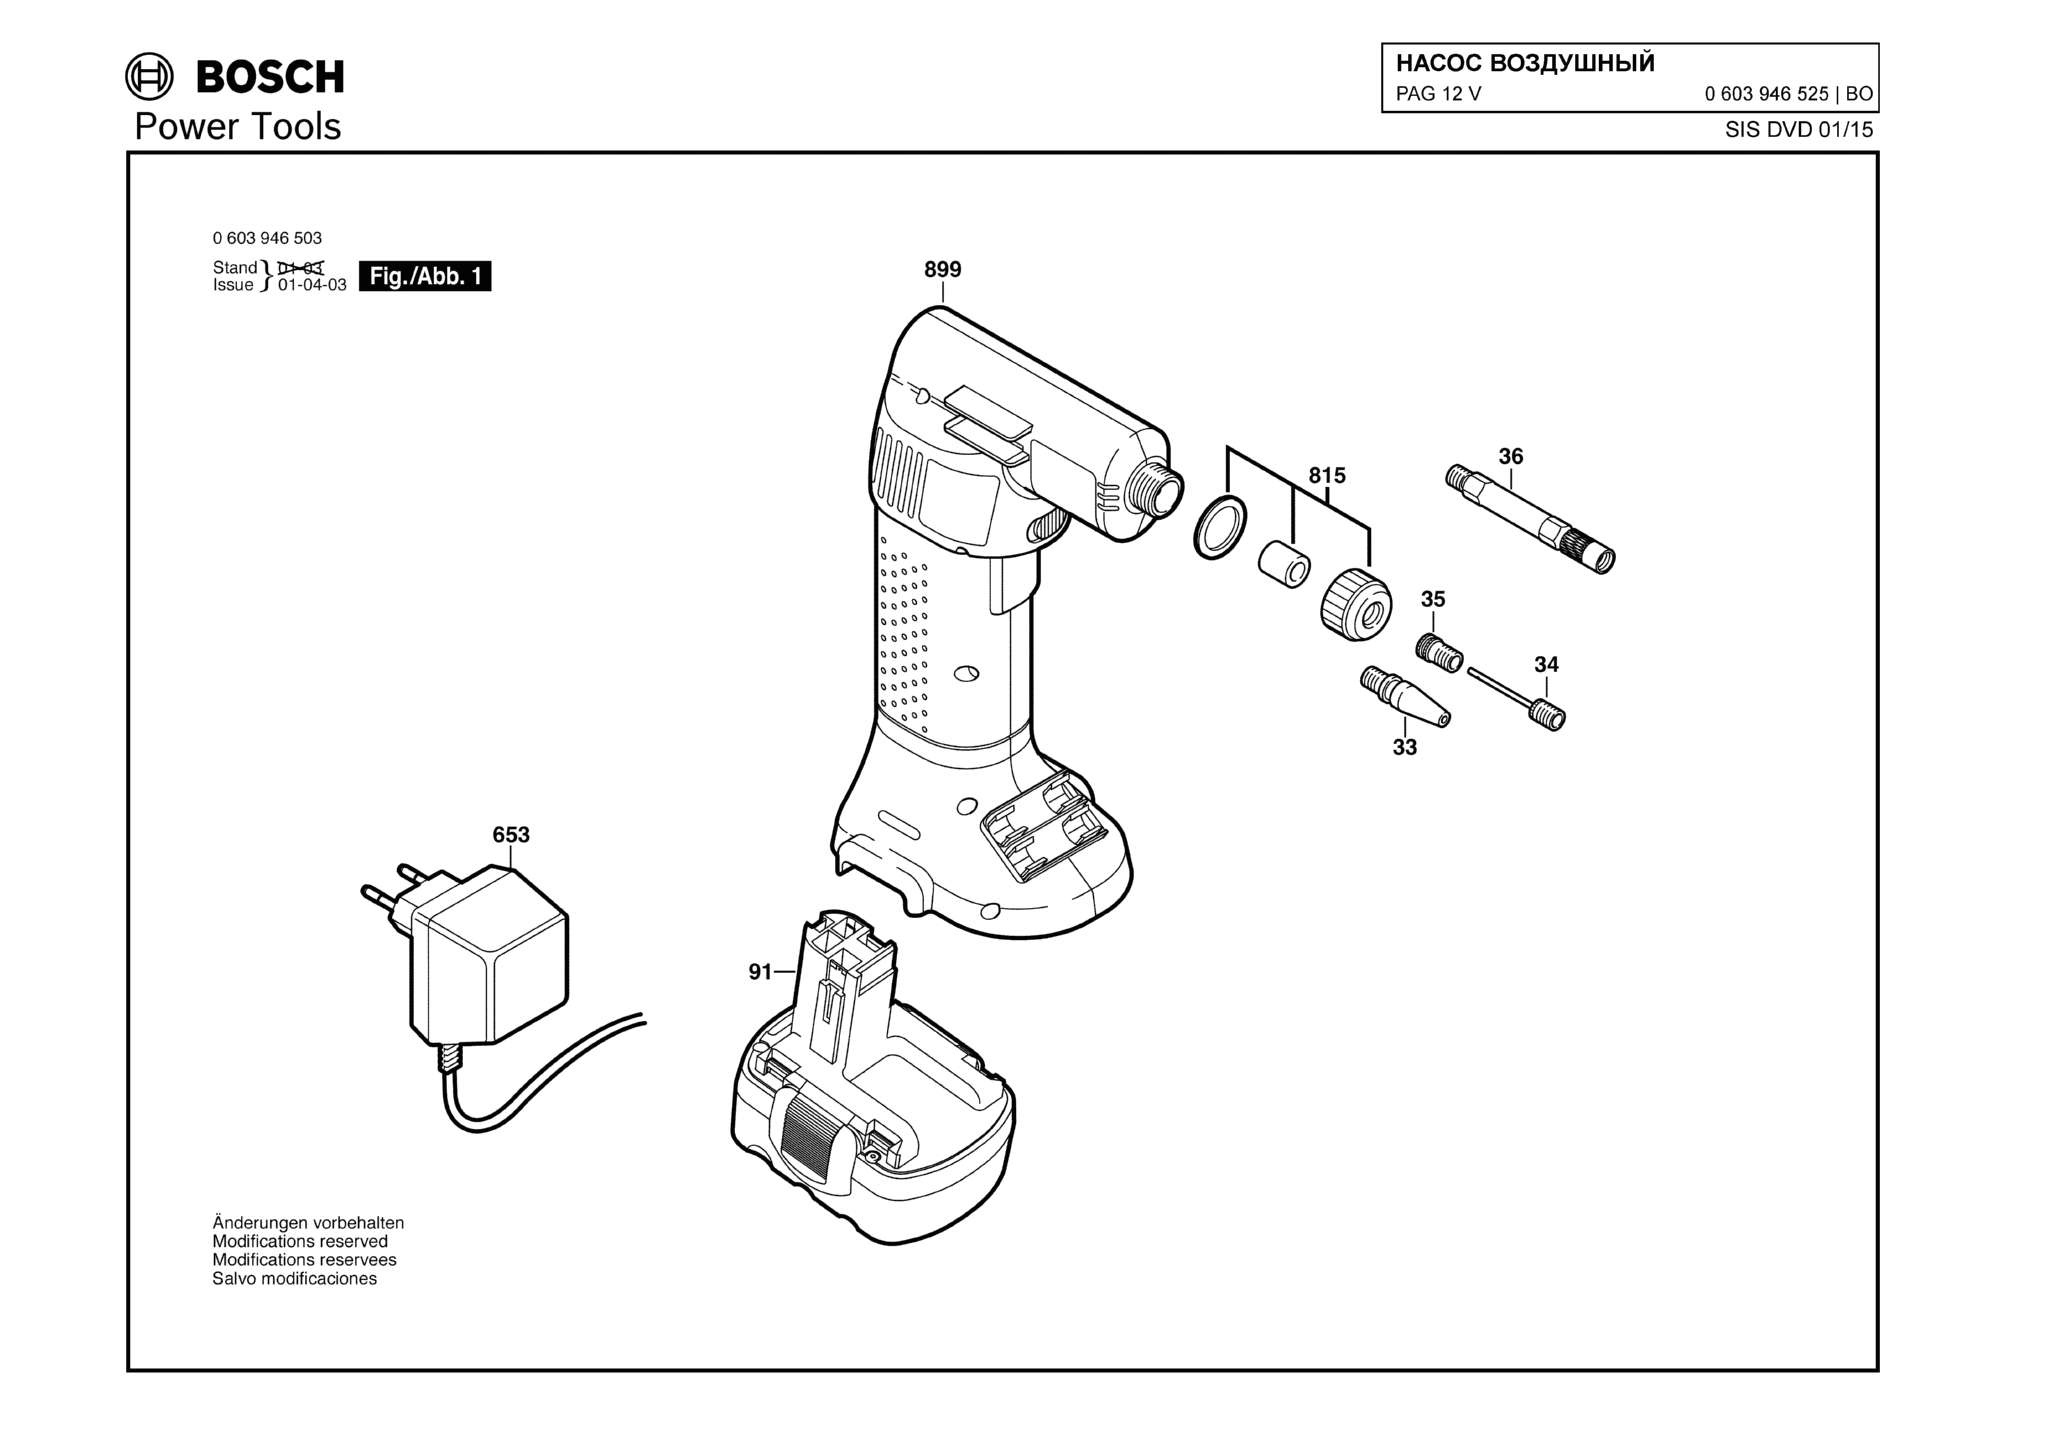 Запчасти, схема и деталировка Bosch PAG 12 V (ТИП 0603946525)